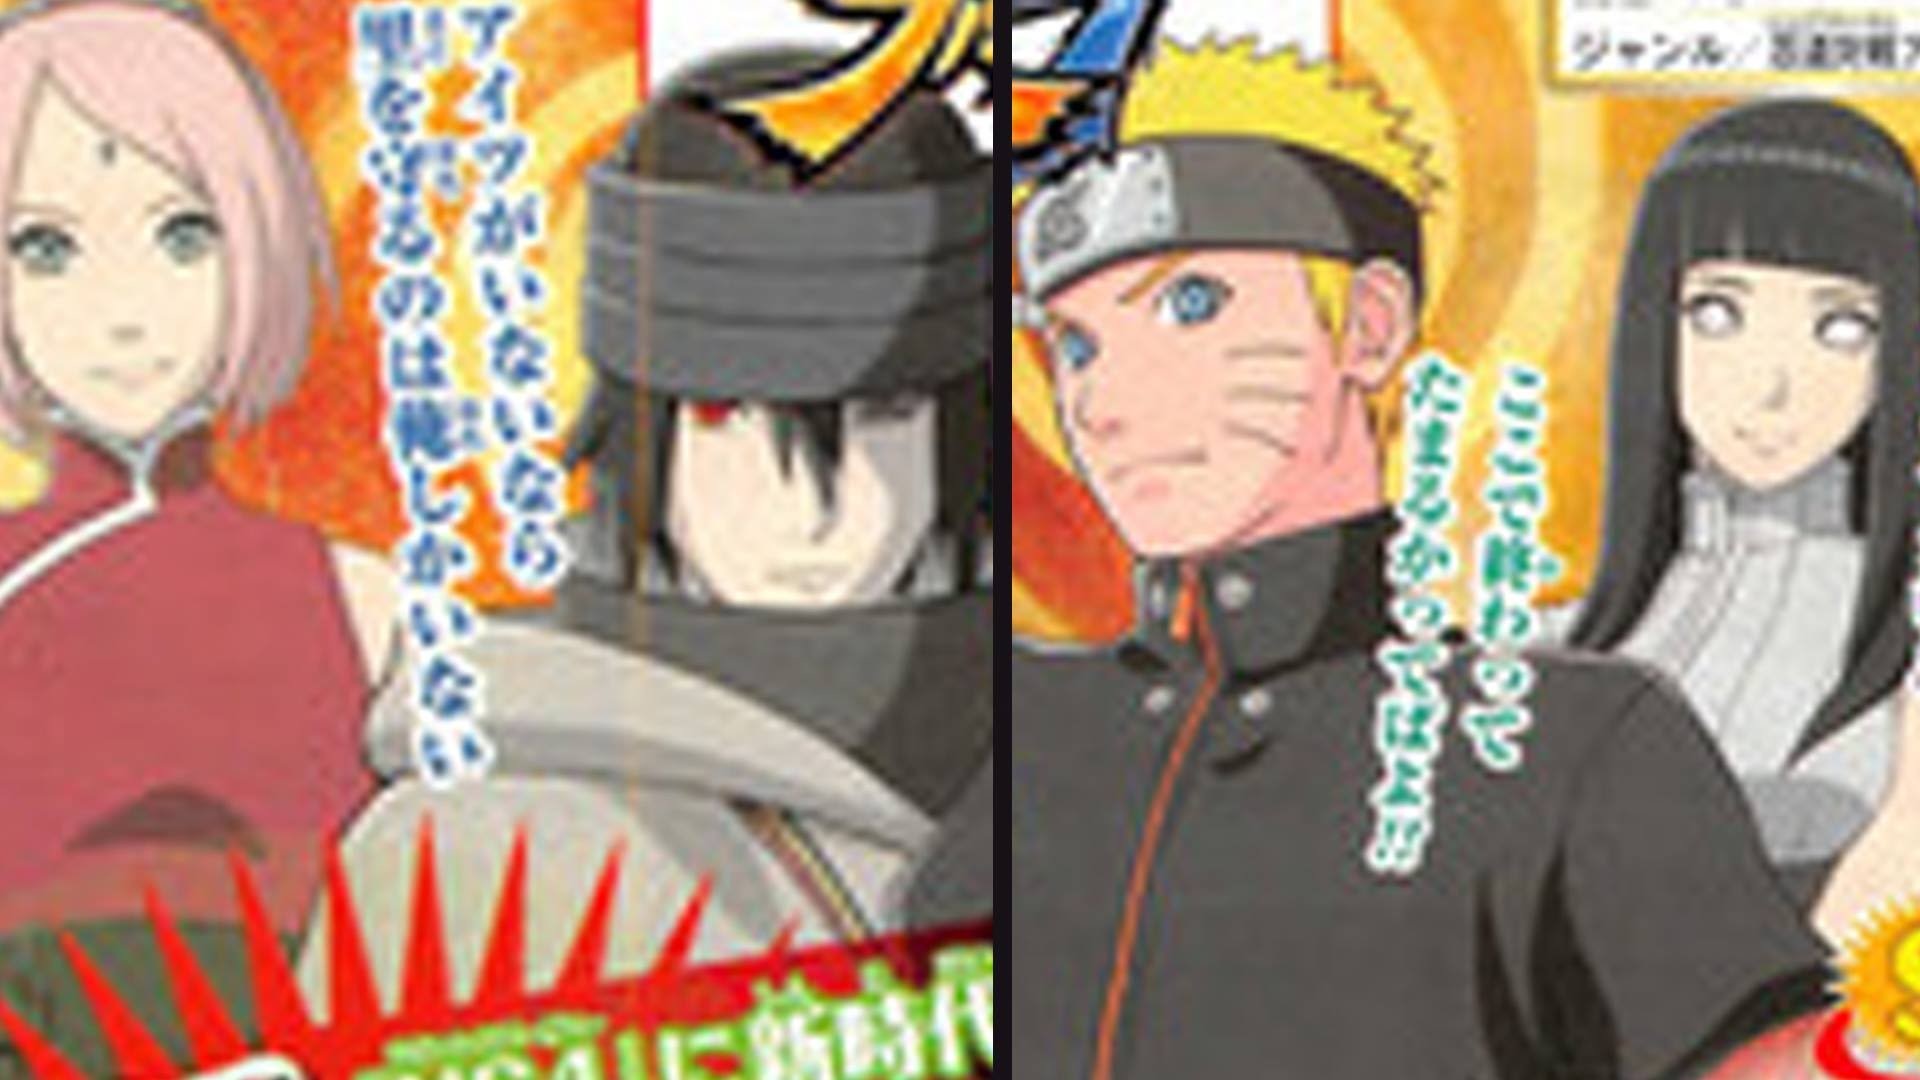 1920x1080 The Last Naruto The Movie: Sasuke, Sakura & Hinata Confirmed For Naruto  Storm 4 - YouTube